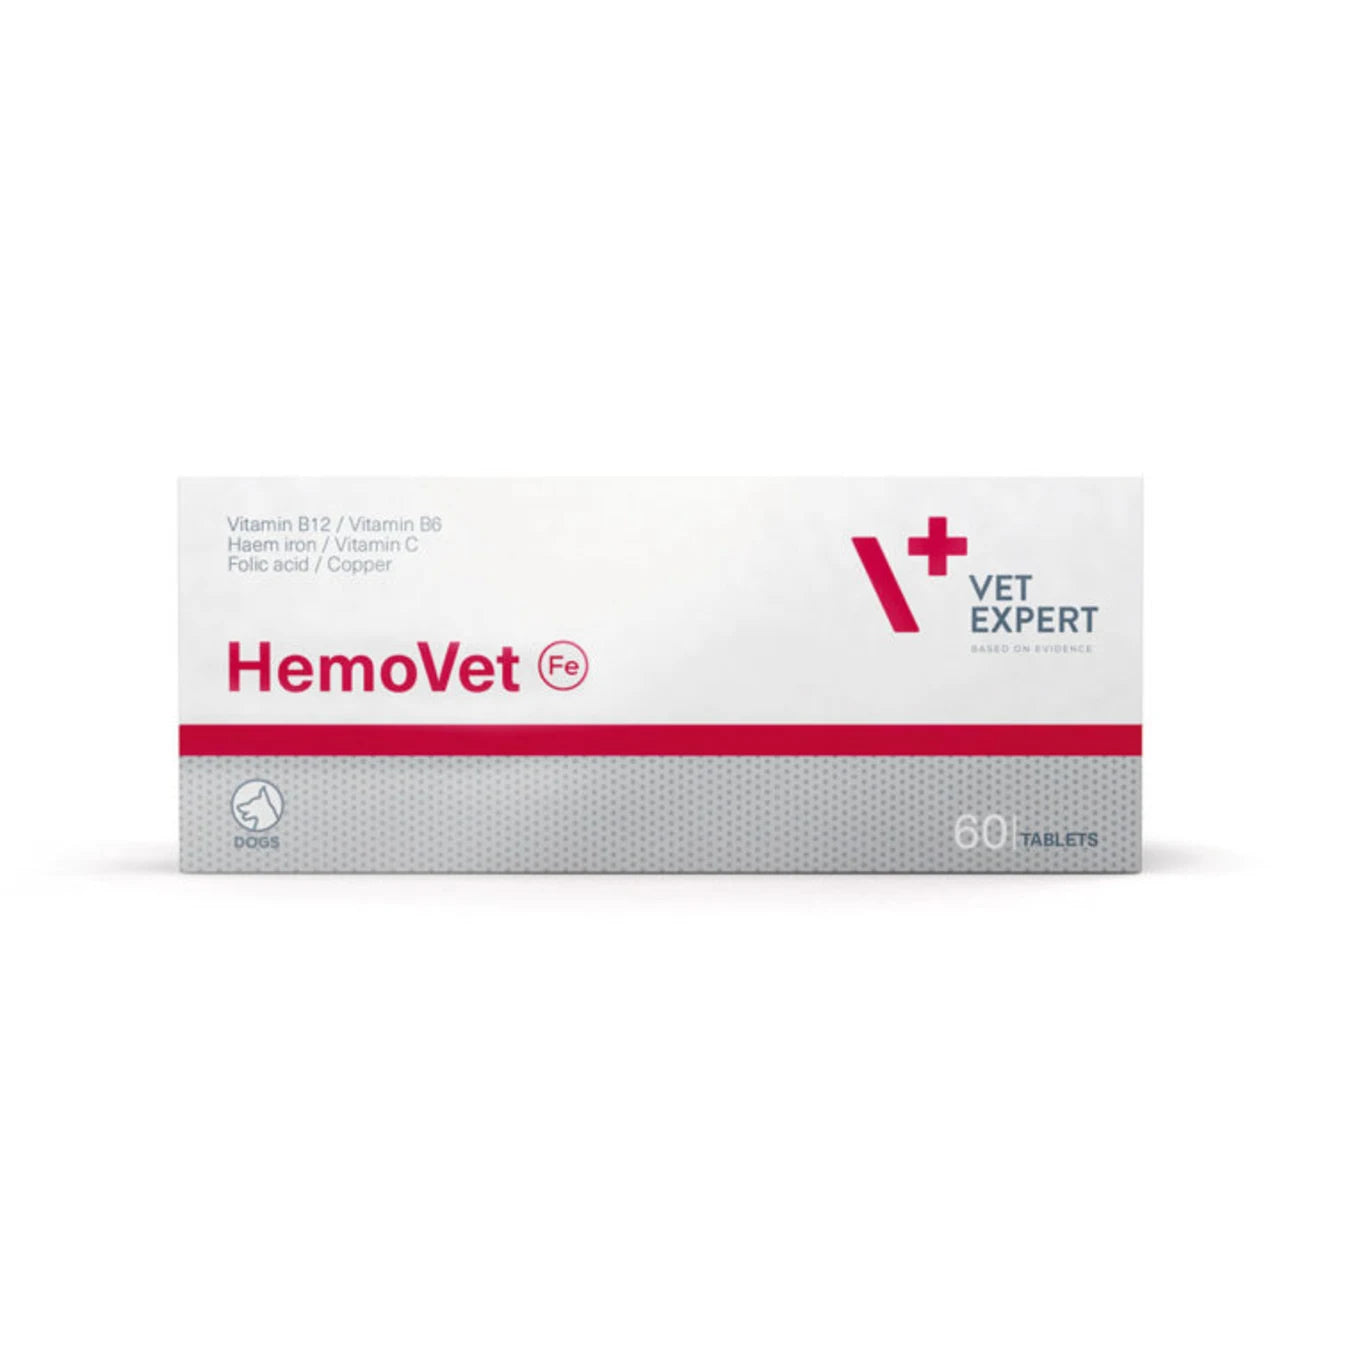 HEMOVET 67 MG - 60 TABLETE - ALTVET - Farmacie veterinara - Pet Shop - Cosmetica